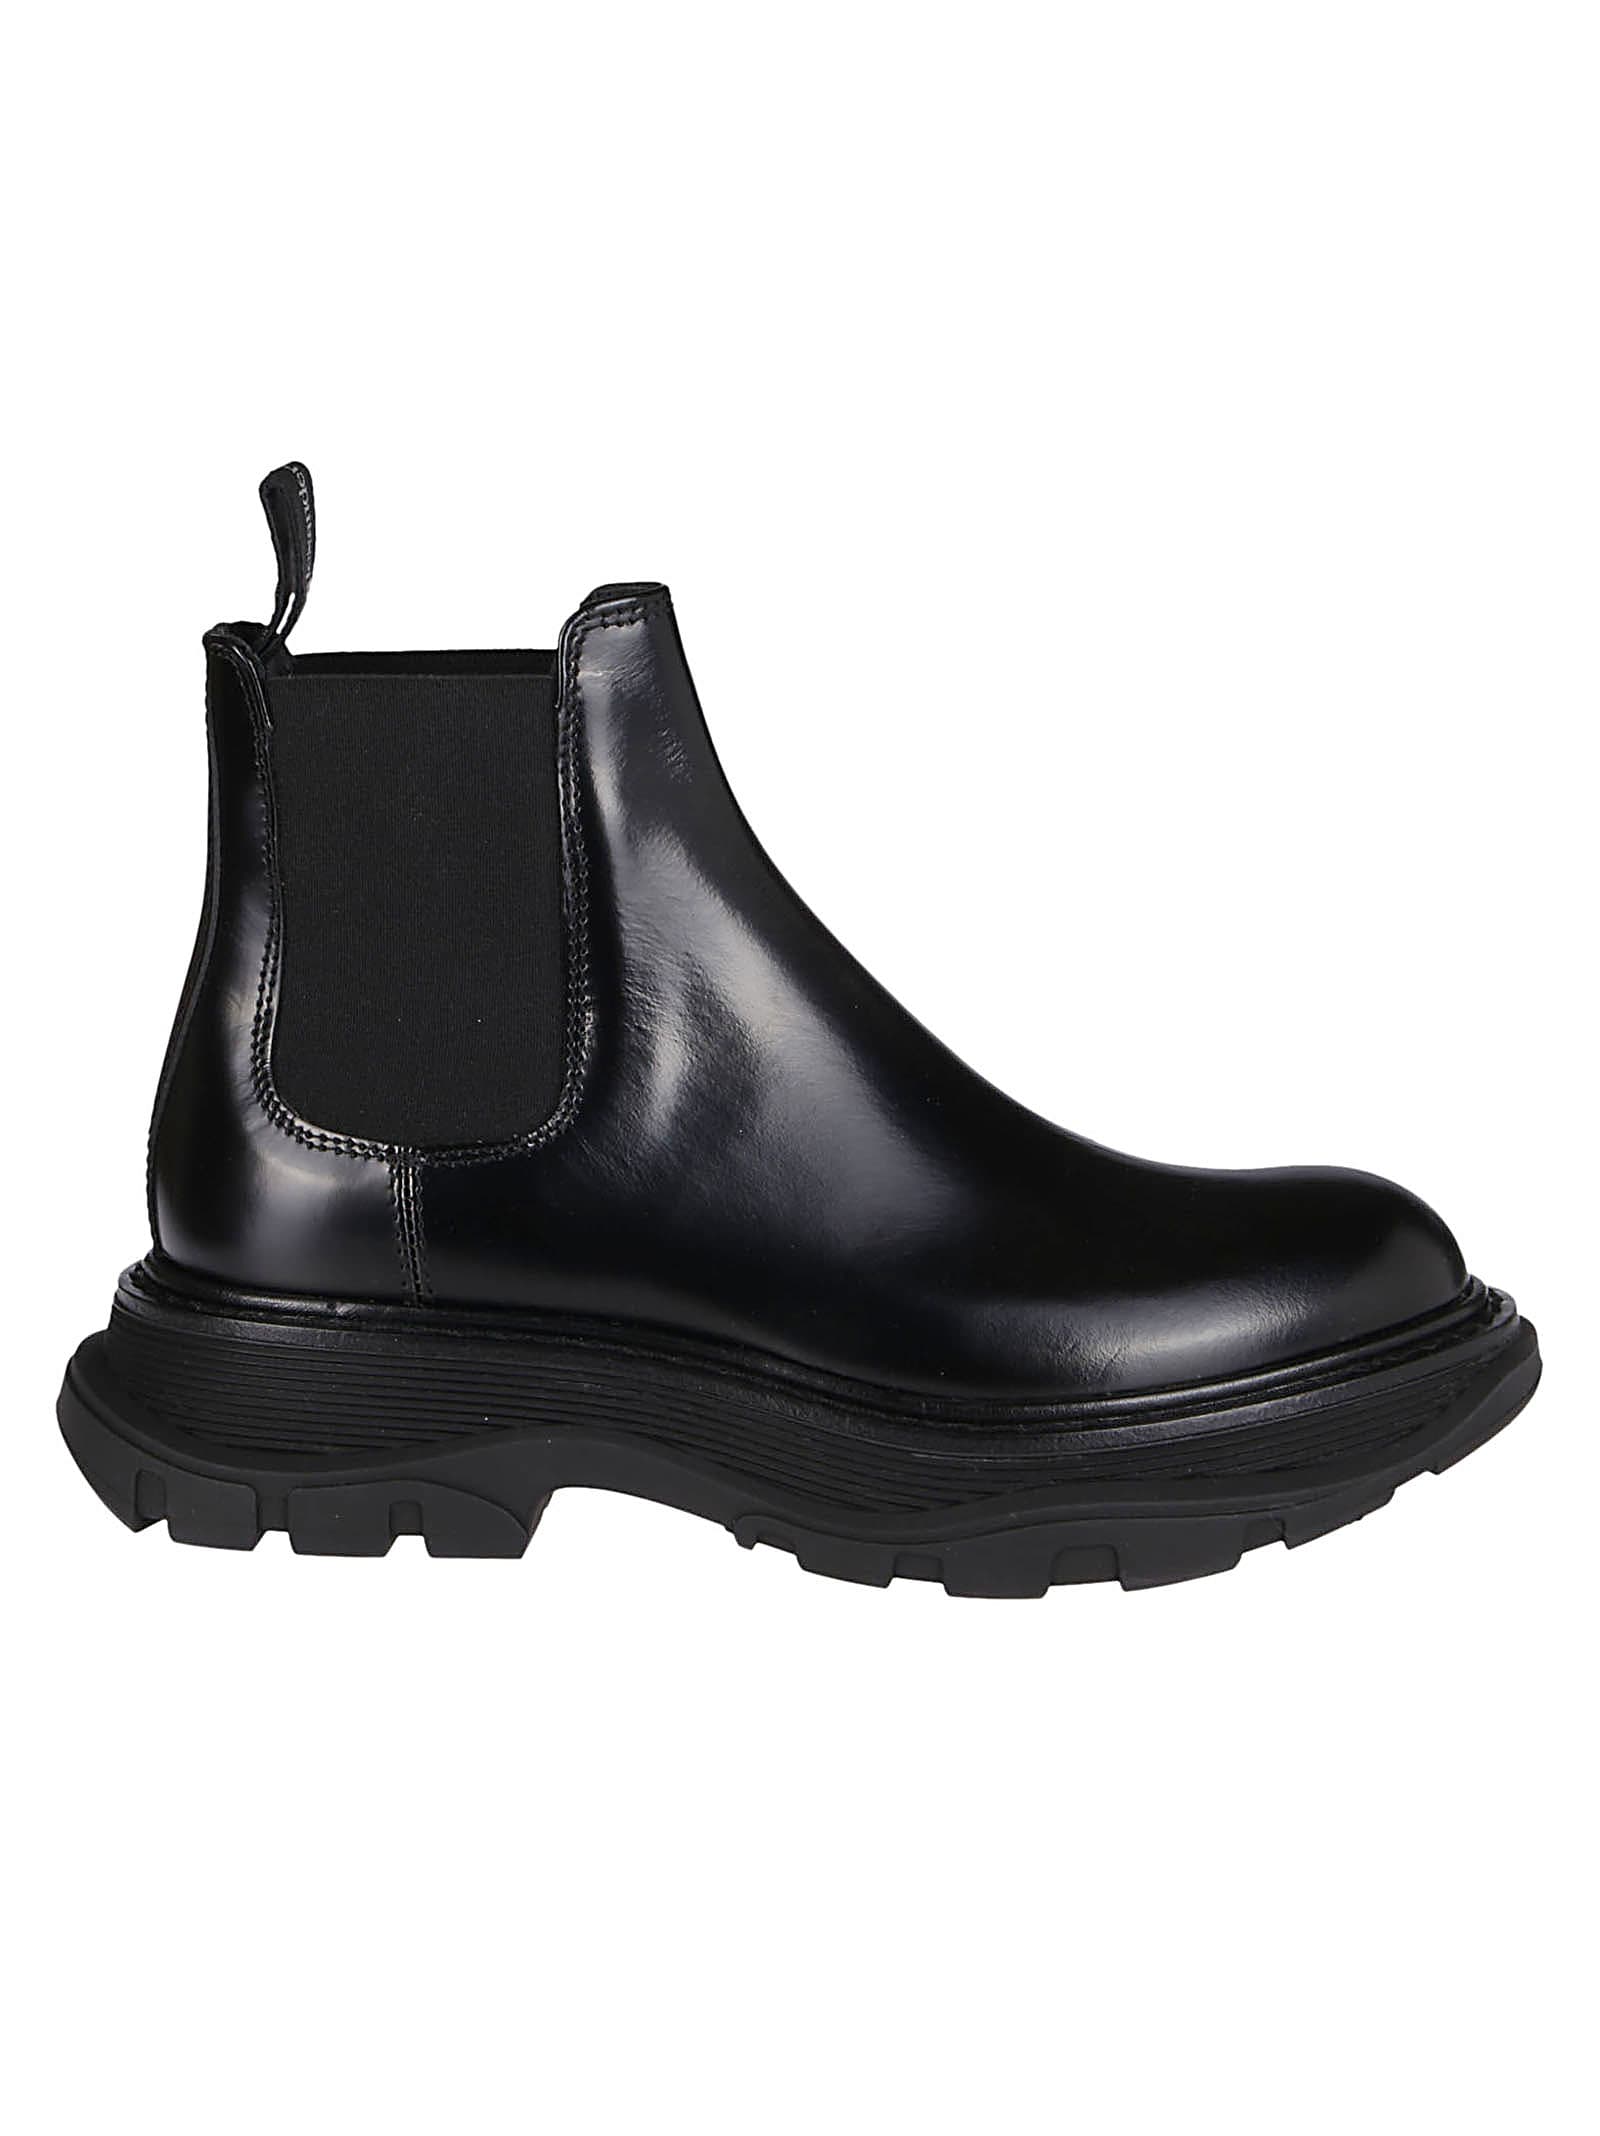 Buy Alexander McQueen Stivali In Pelle Nera online, shop Alexander McQueen shoes with free shipping